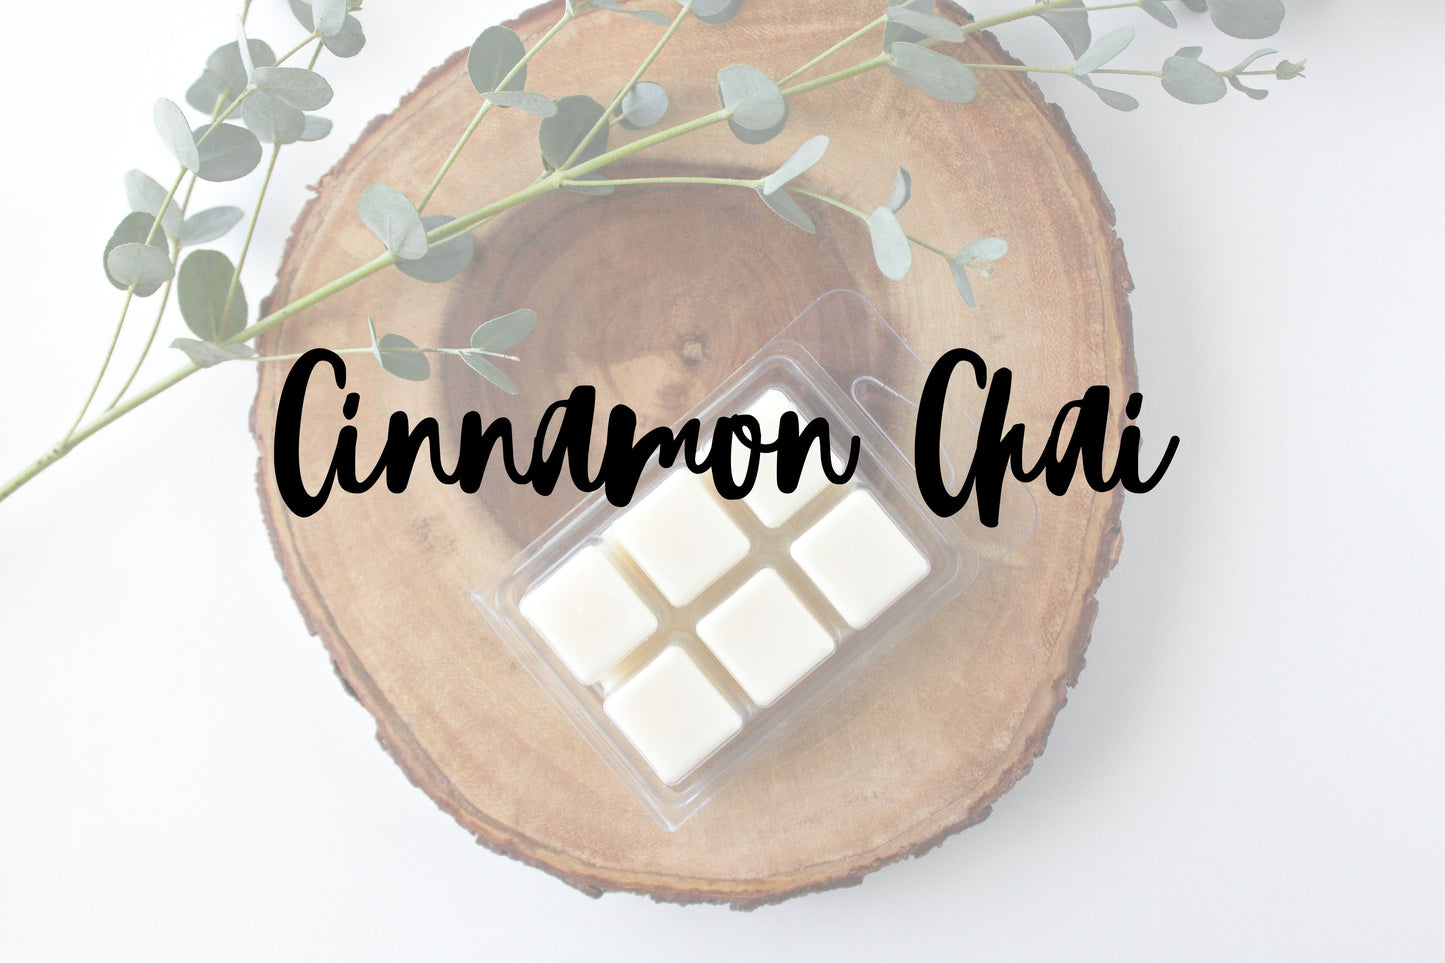 Cinnamon Chai Soy Wax Melt